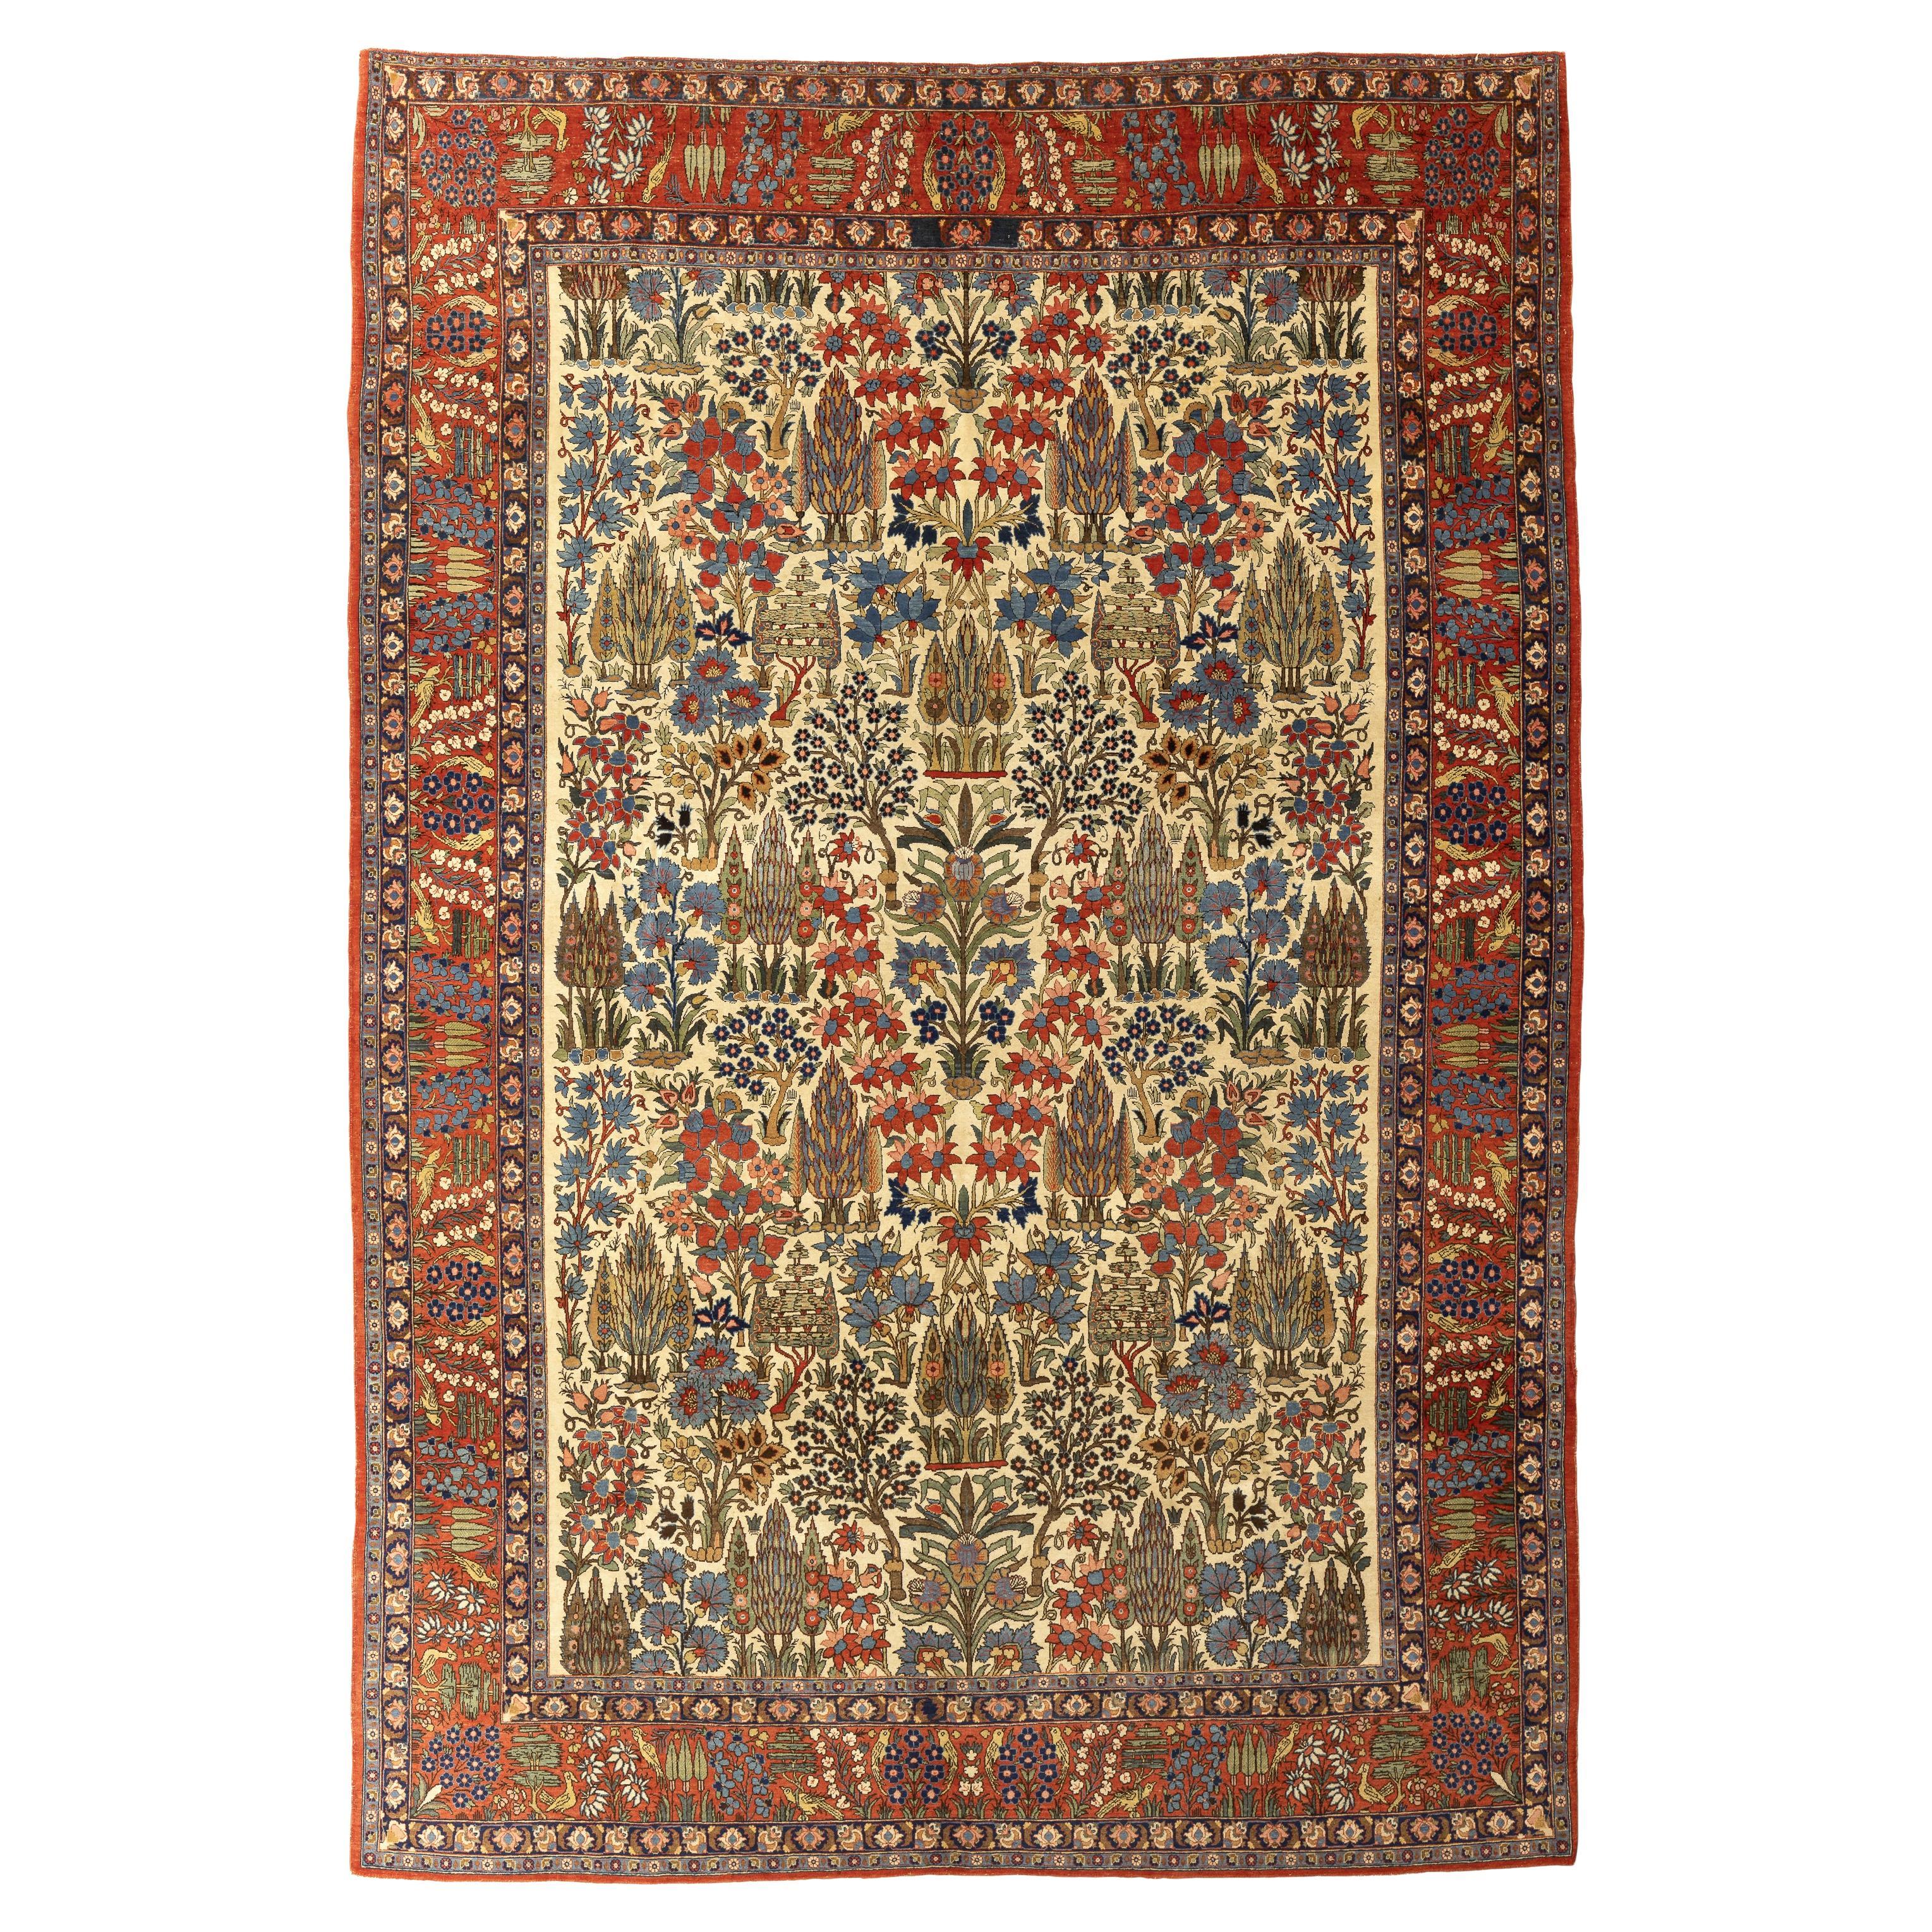 Antique Isfahan Carpet